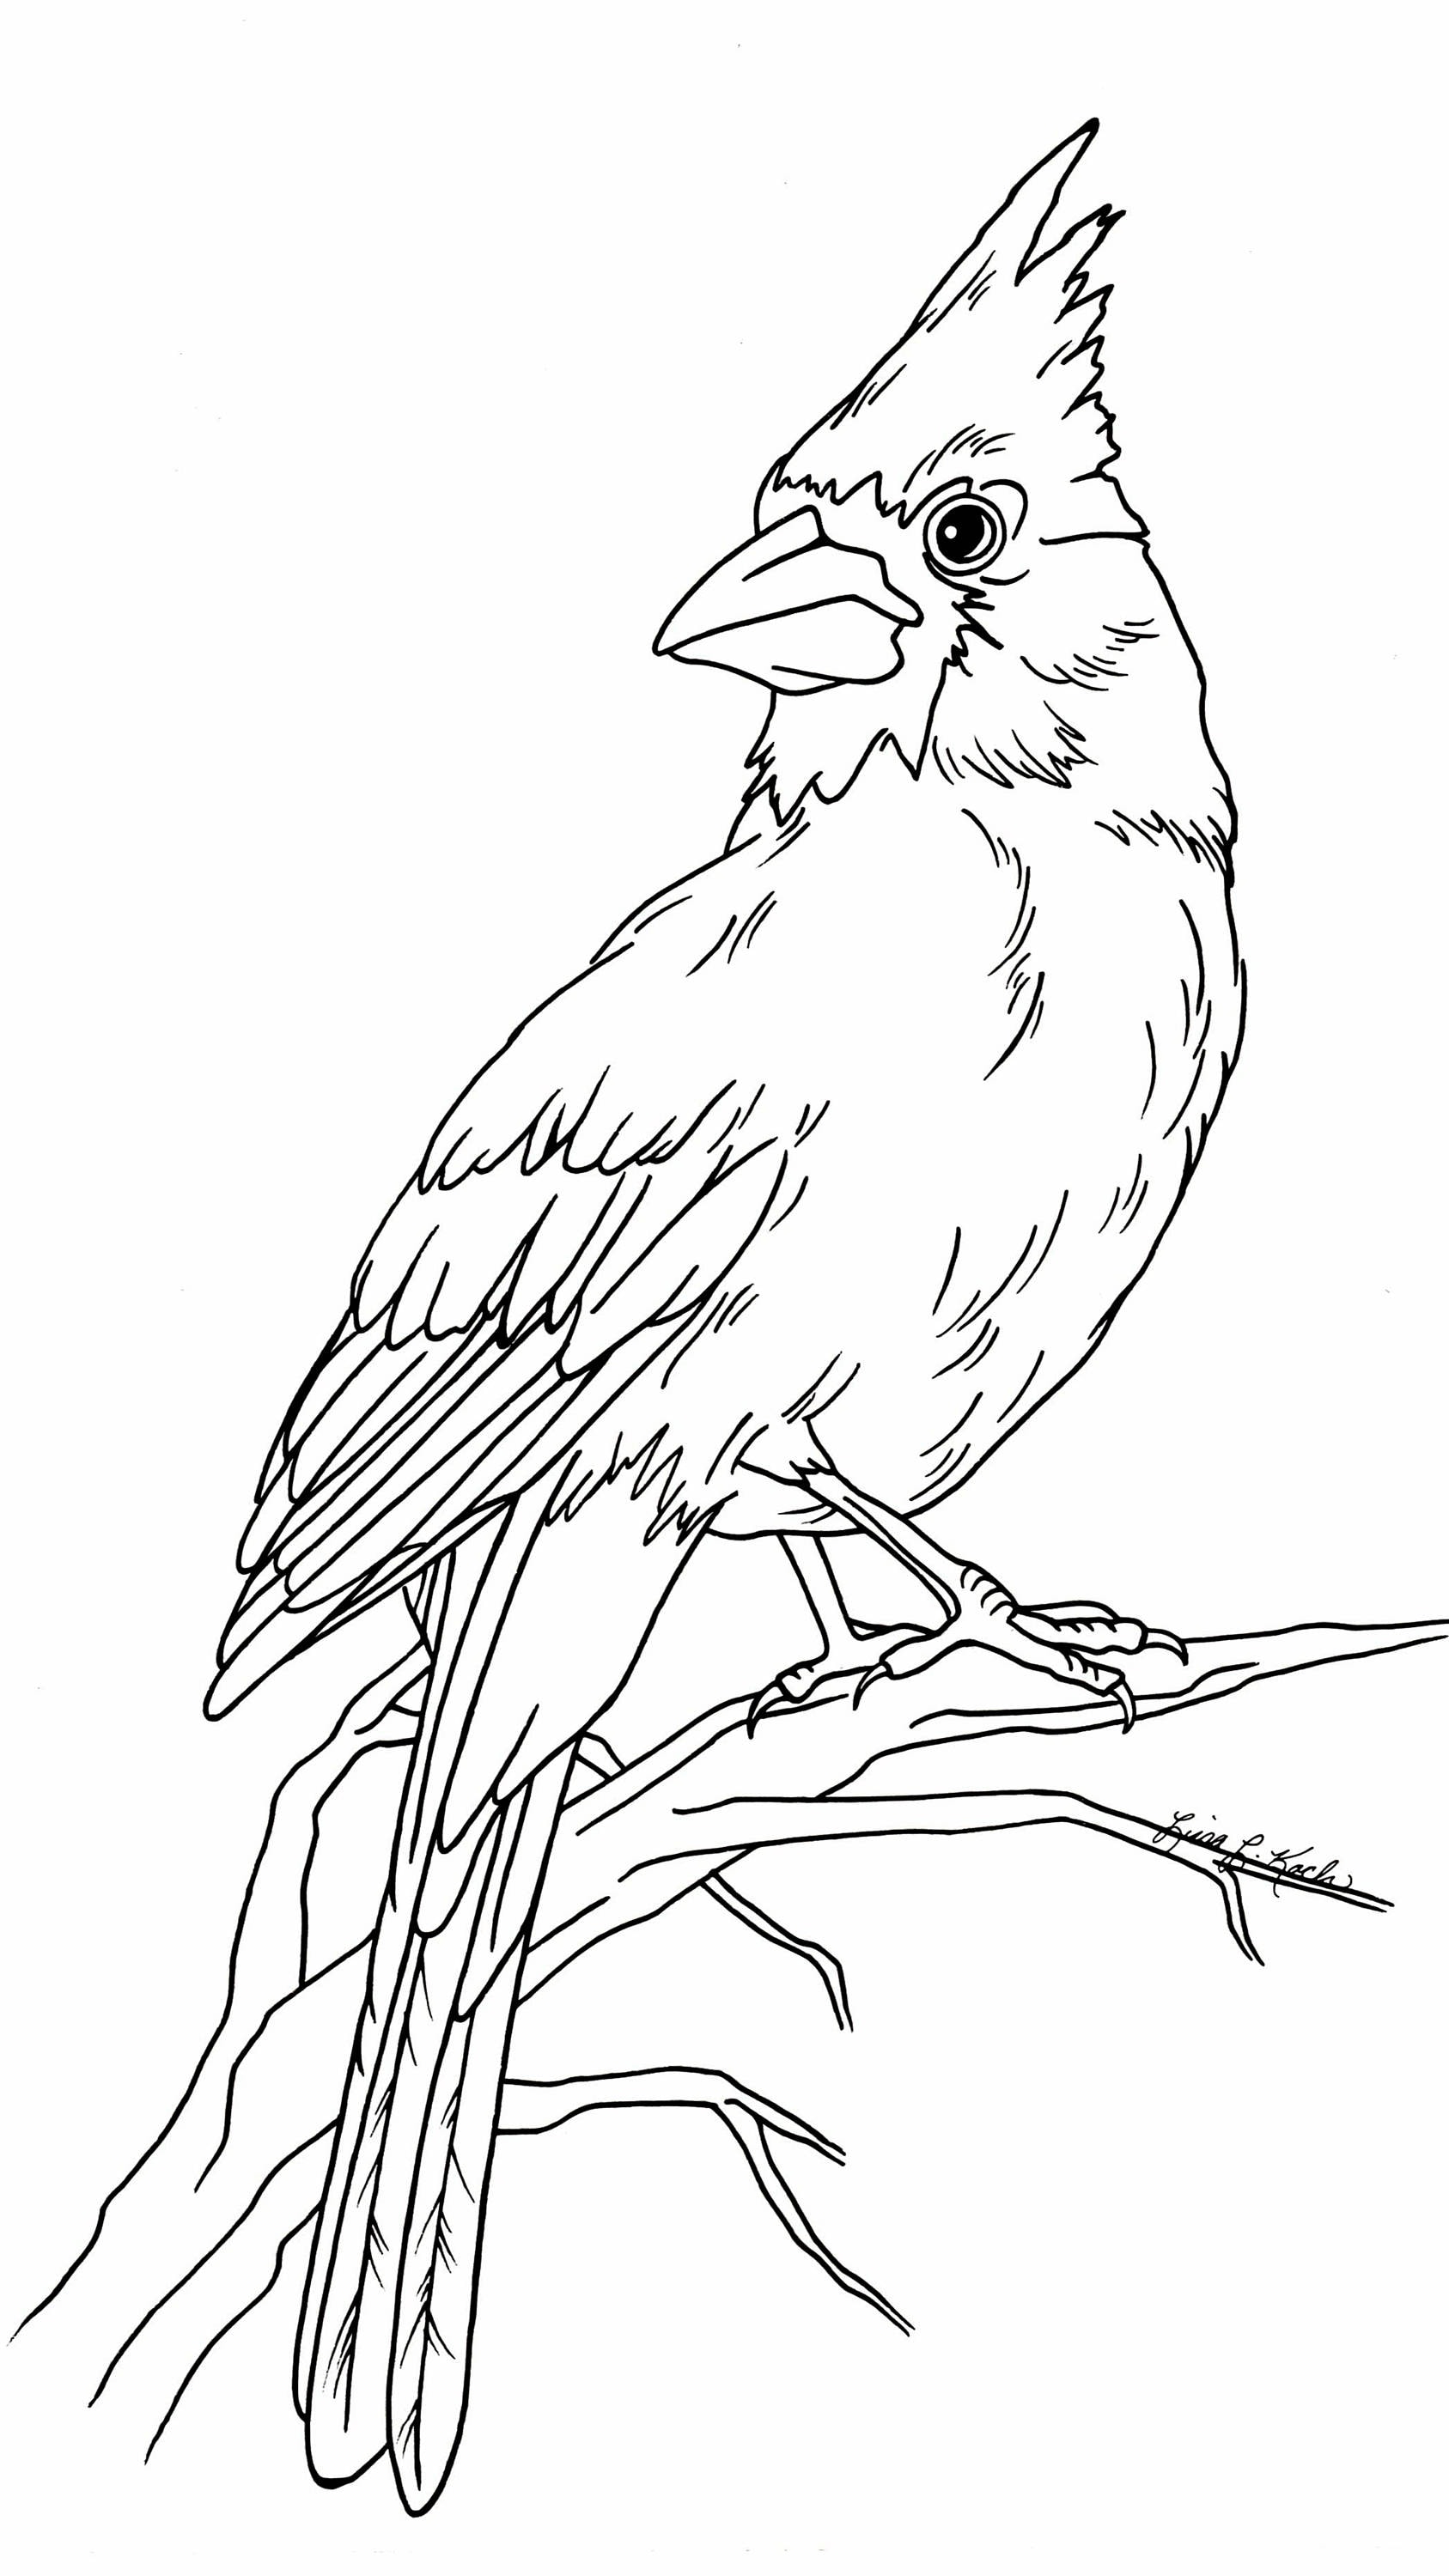 Cardinal coloring page